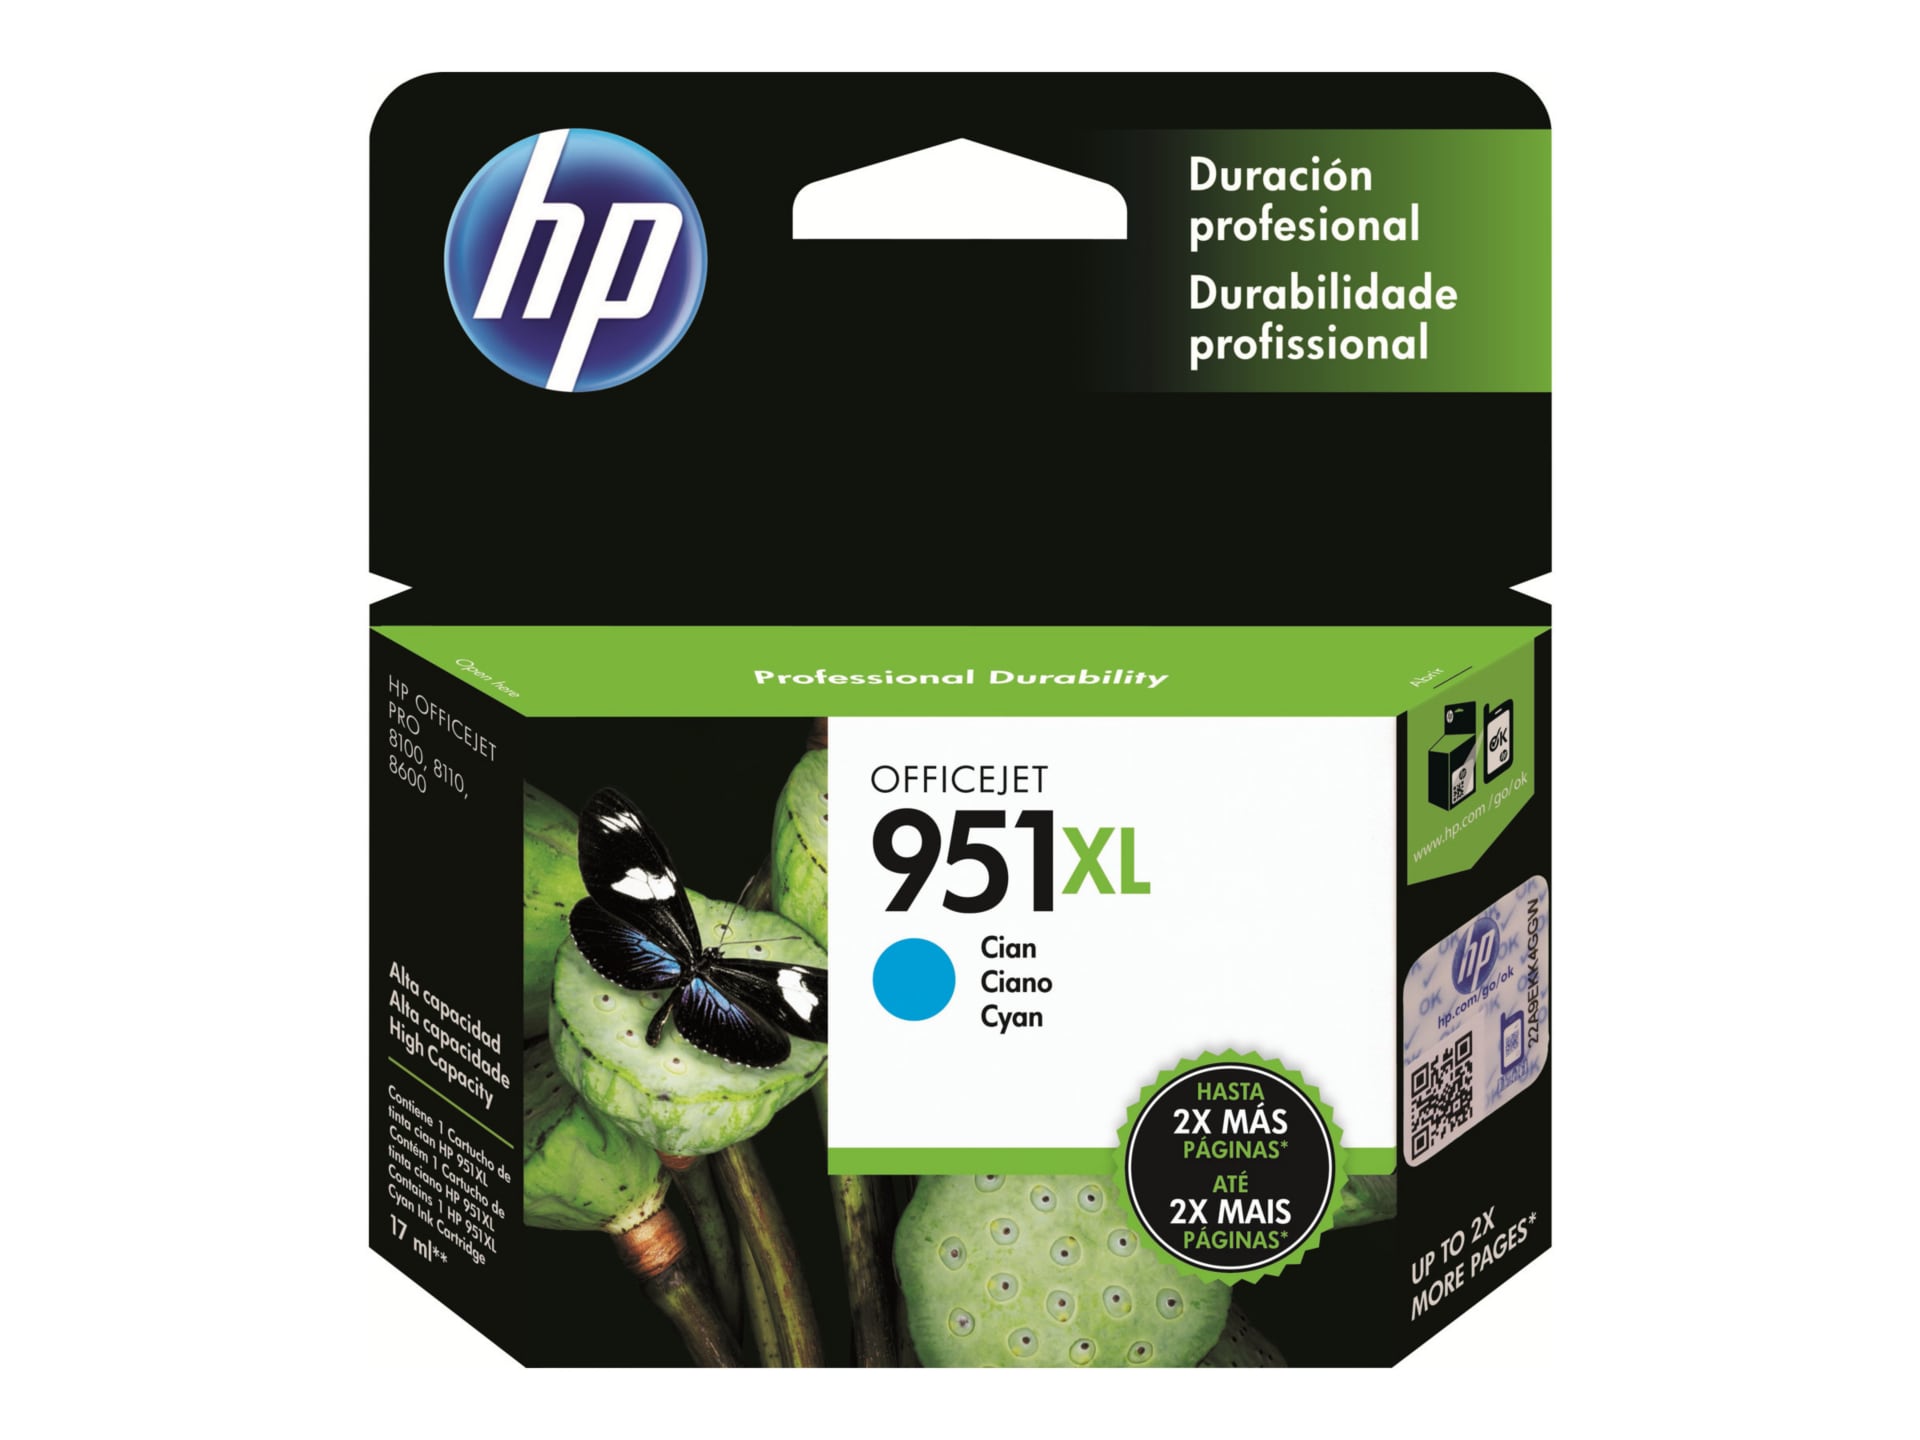 HP 951XL Cyan High Yield Ink Cartridge